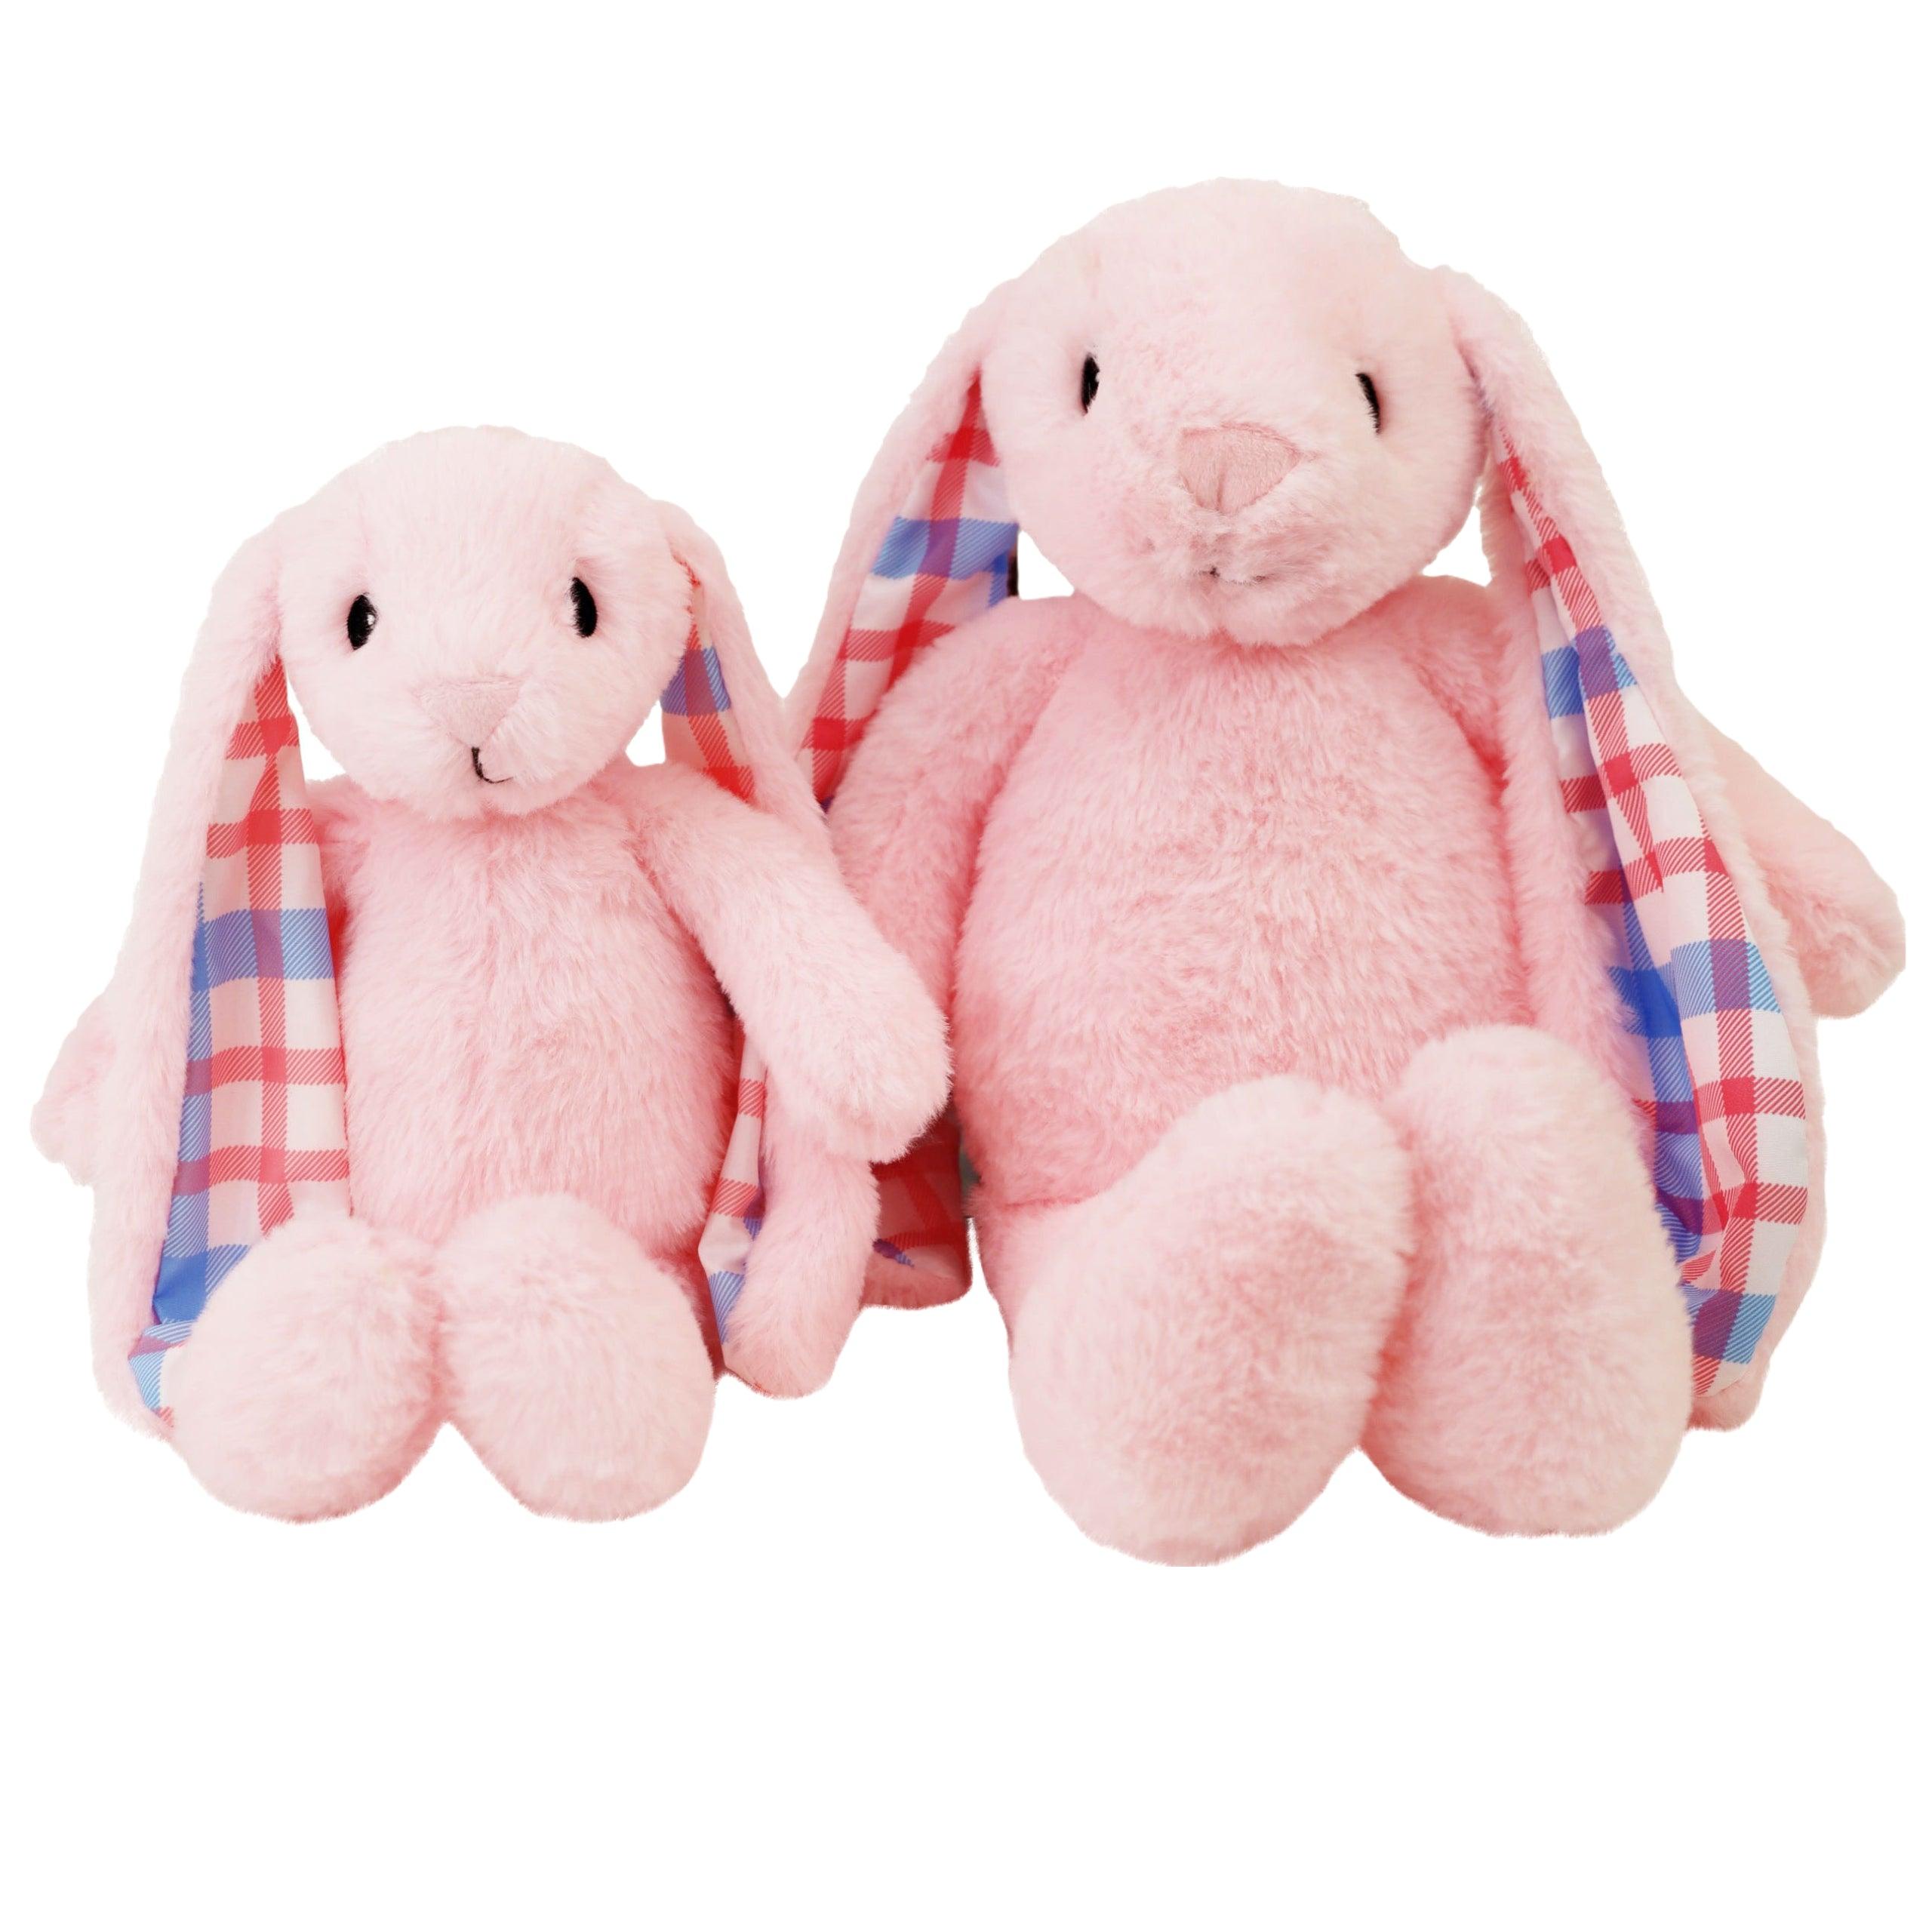 Plushible Plaid Eared Bunny Pink - OrangeOnions Wholesale